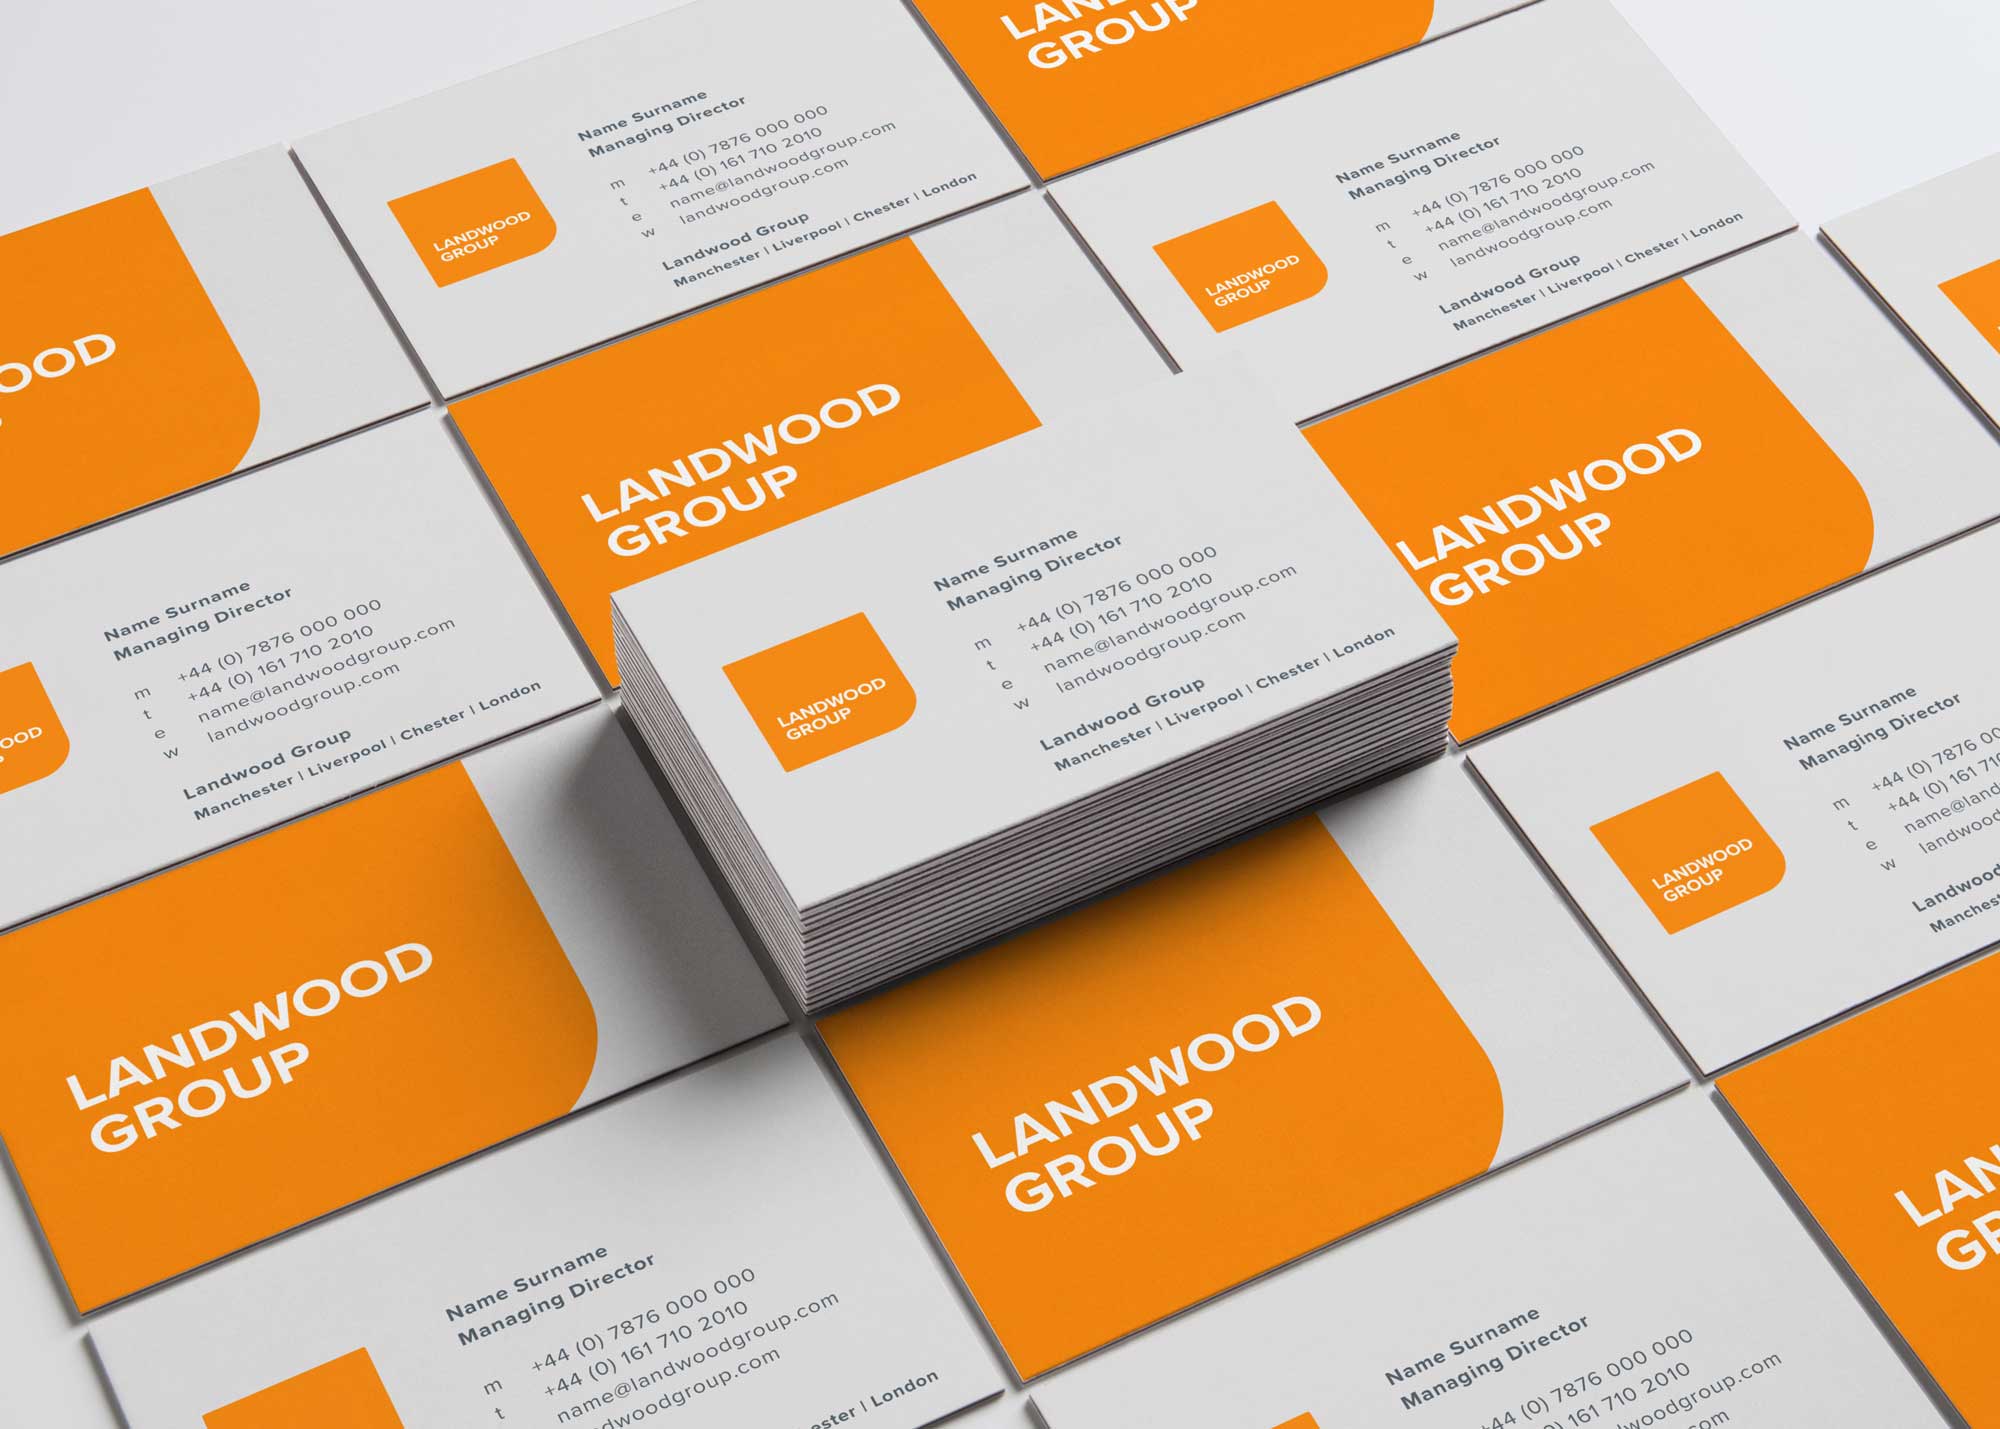 Landwood Group rebrand and new website